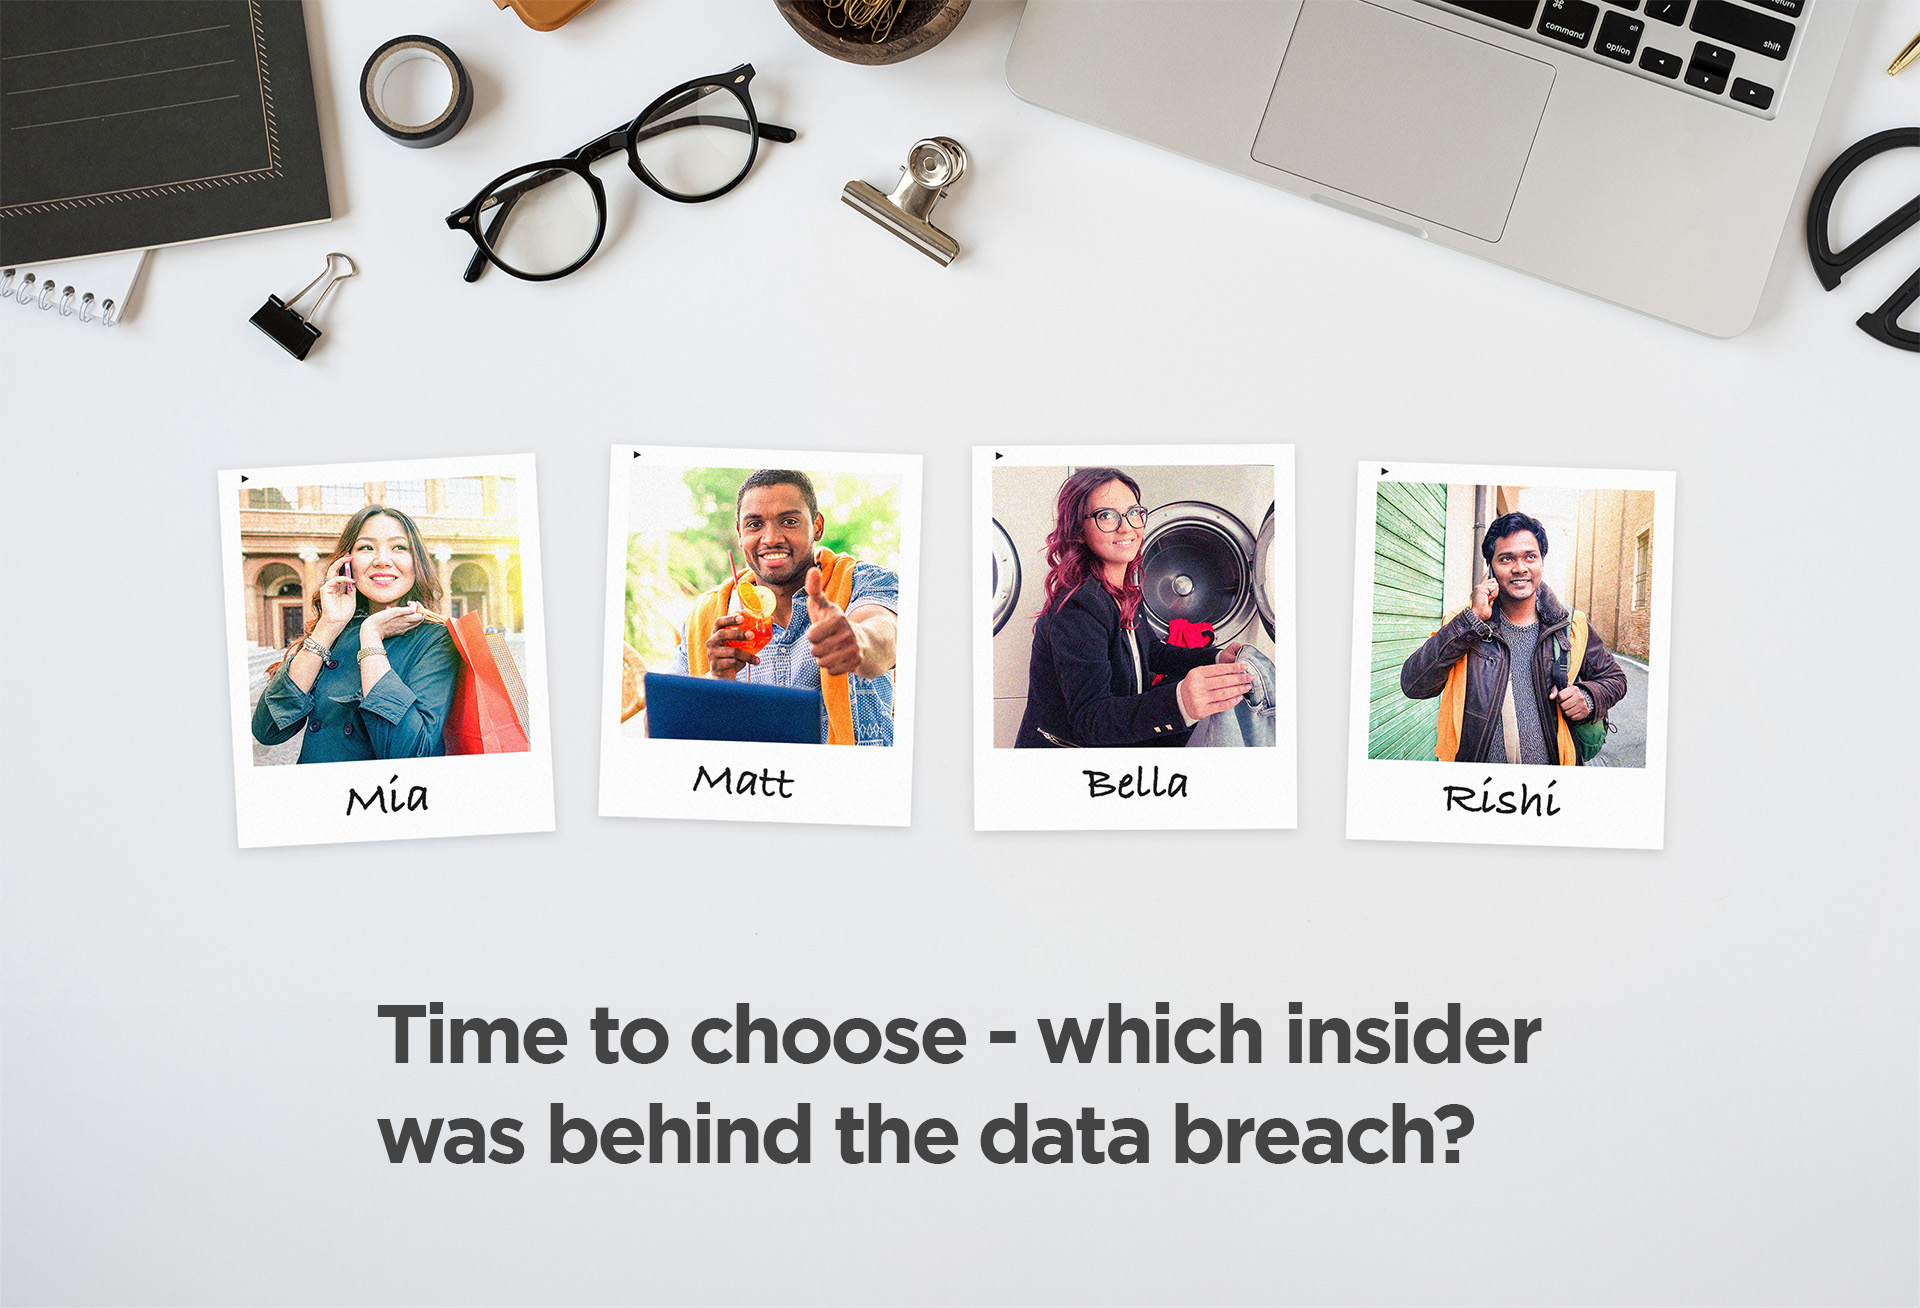 Insider threats and data breaches